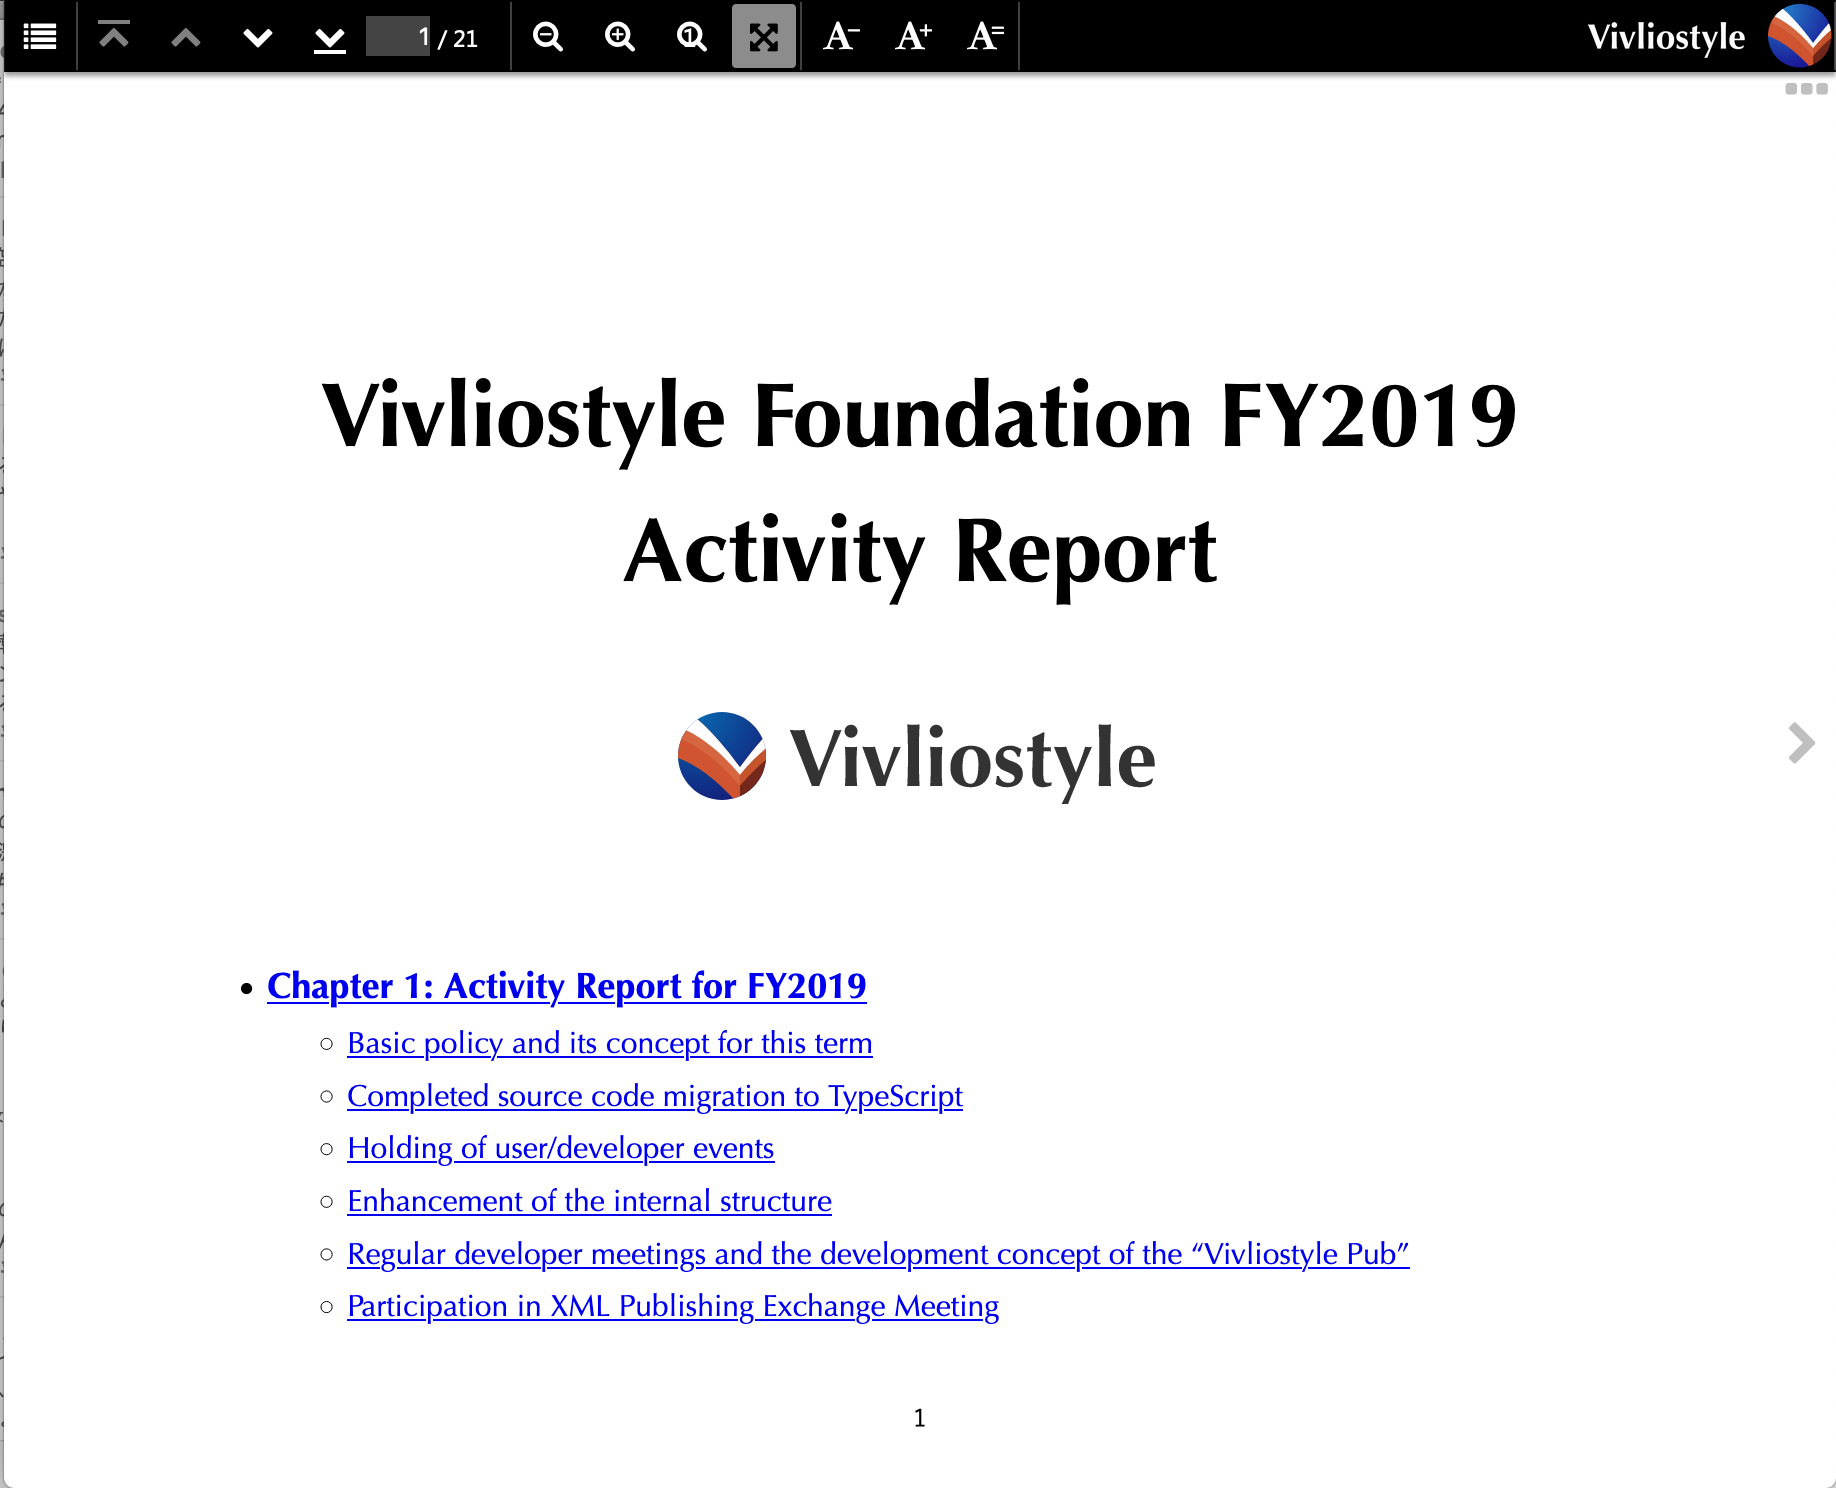 FY2019 Activity Report